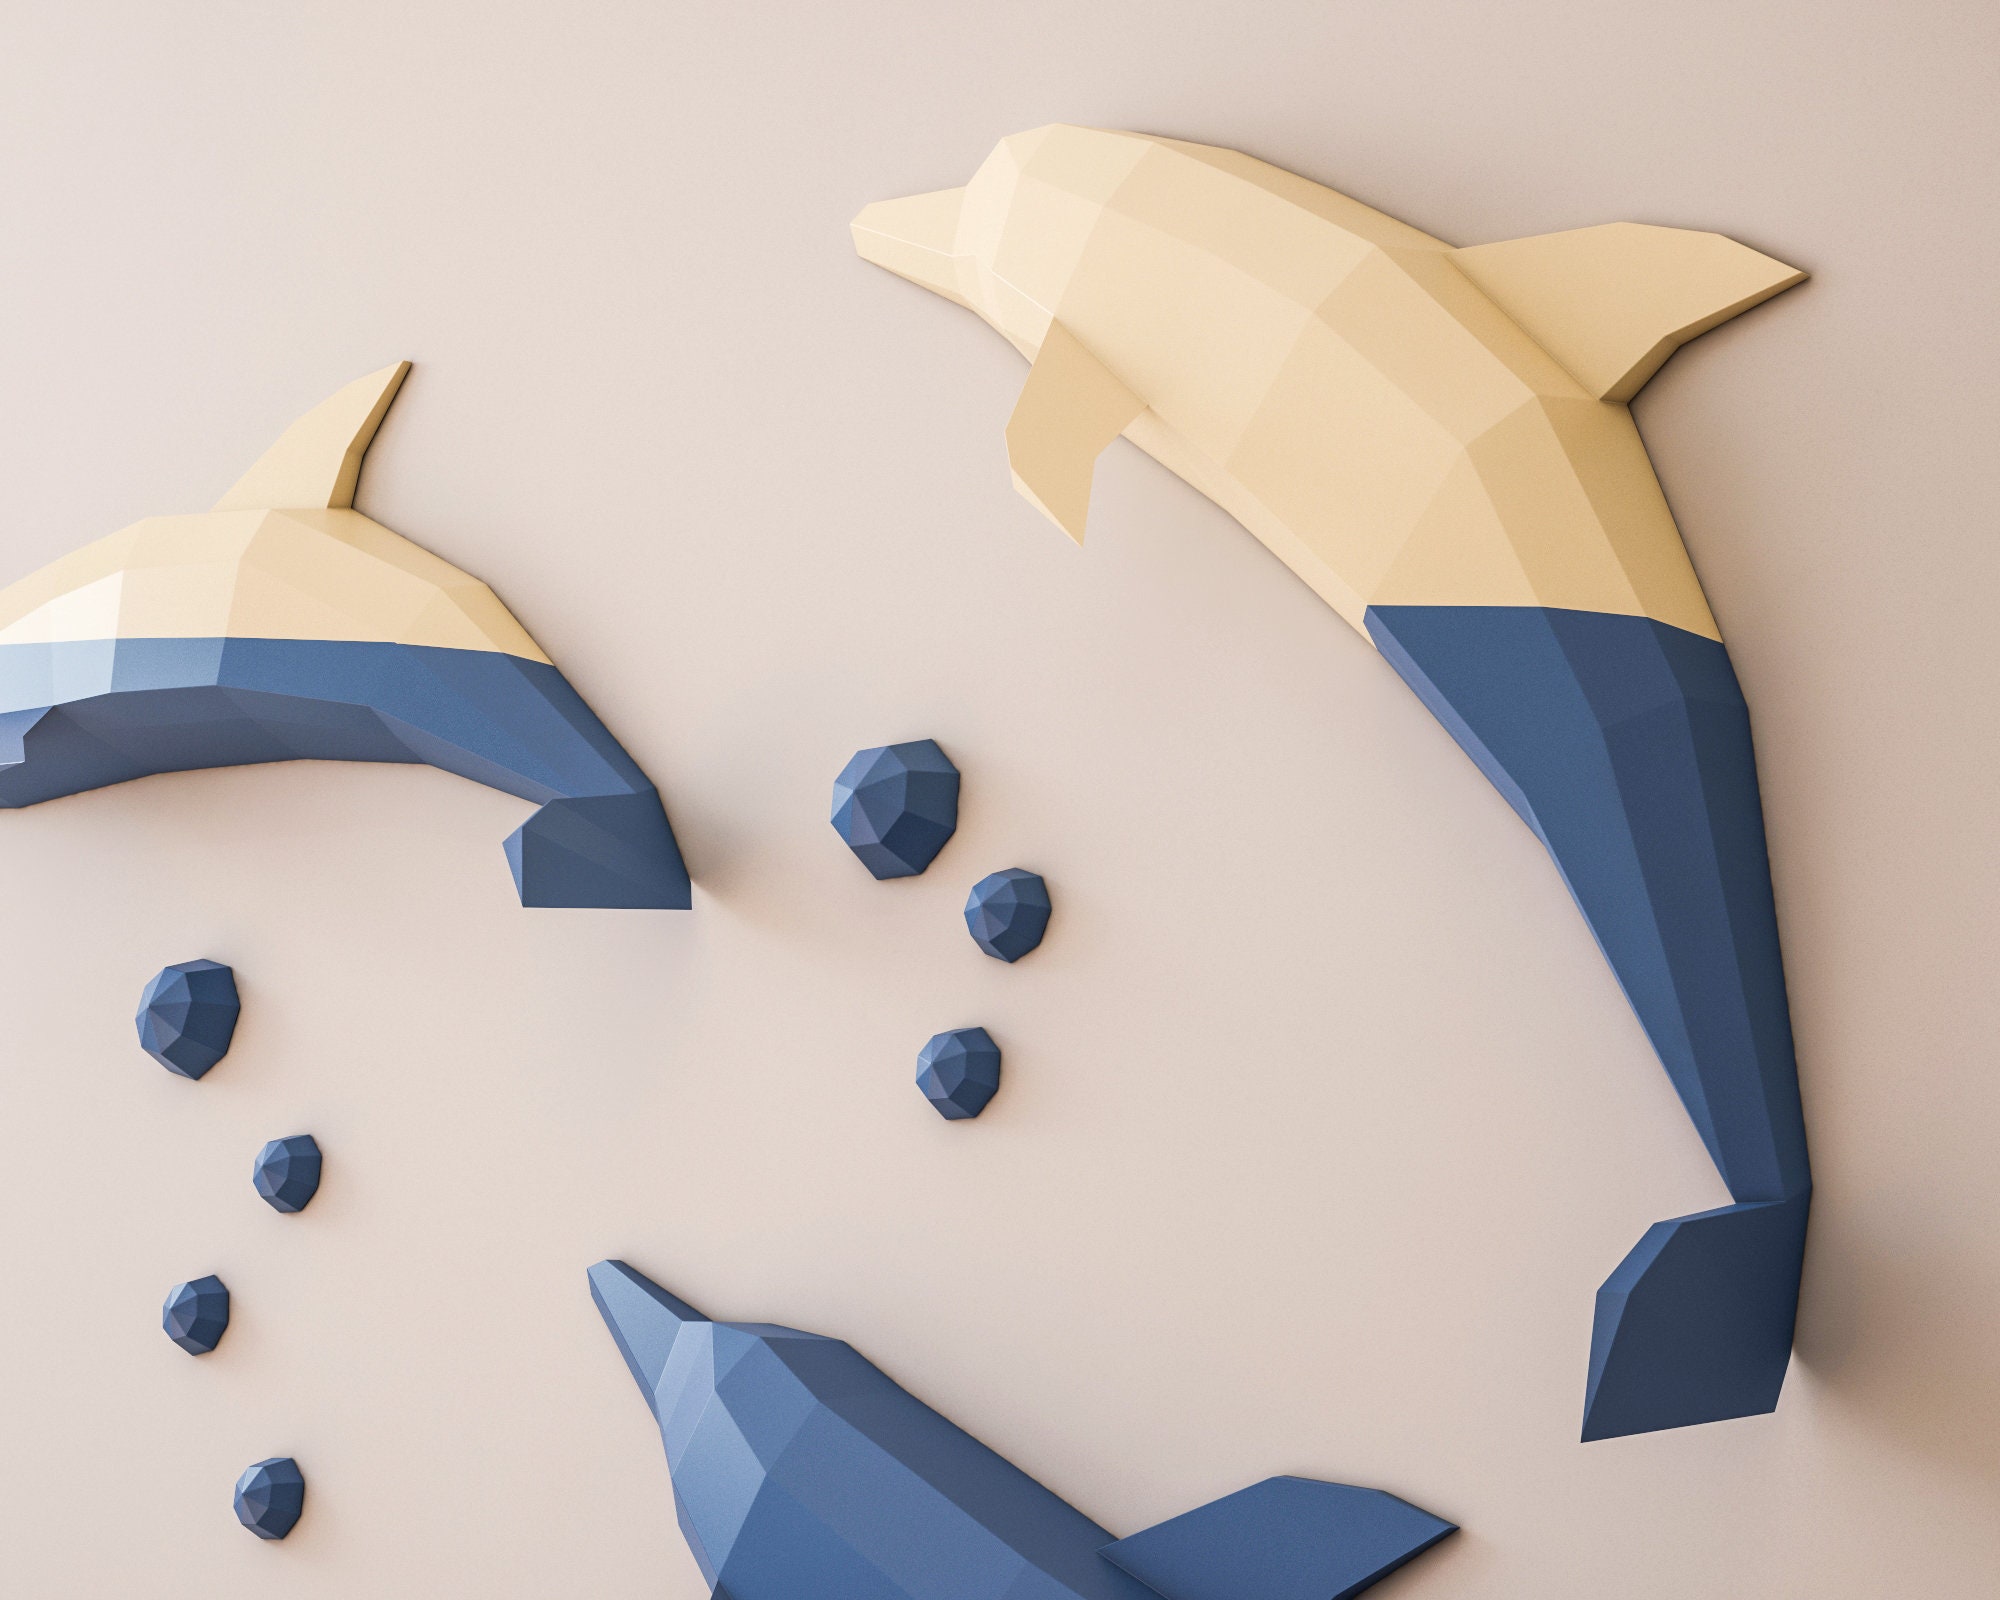 Papercraft PDF dolphins, 3D origami paper craft DIY kit, Hom - Inspire  Uplift